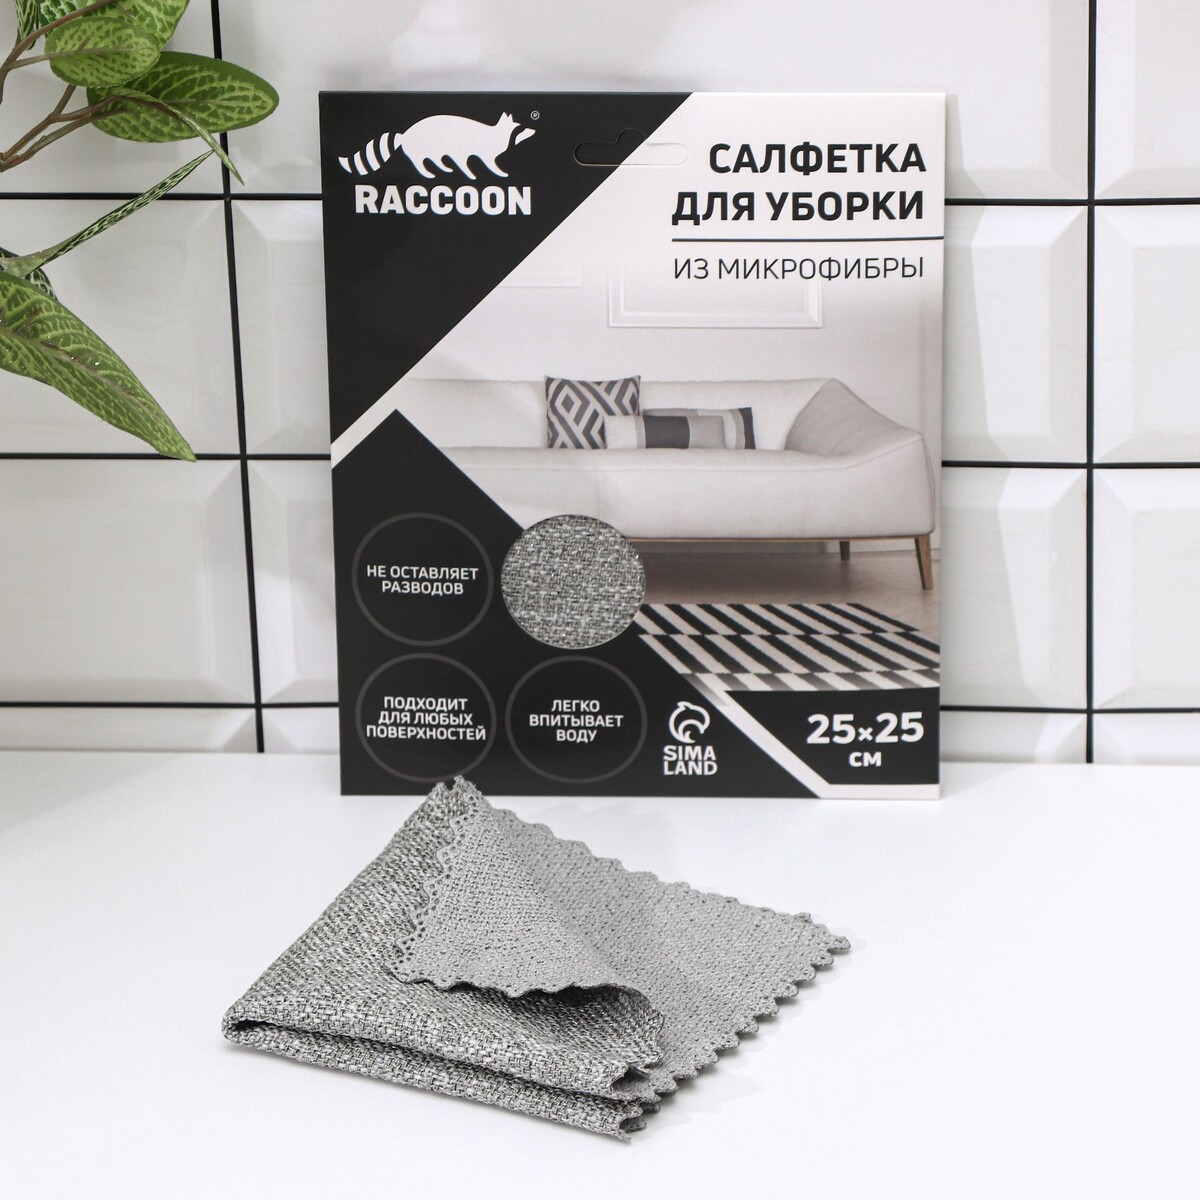 Салфетка микрофибра raccoon салфетка бытовая для уборки микрофибра 30х30 см york 026350